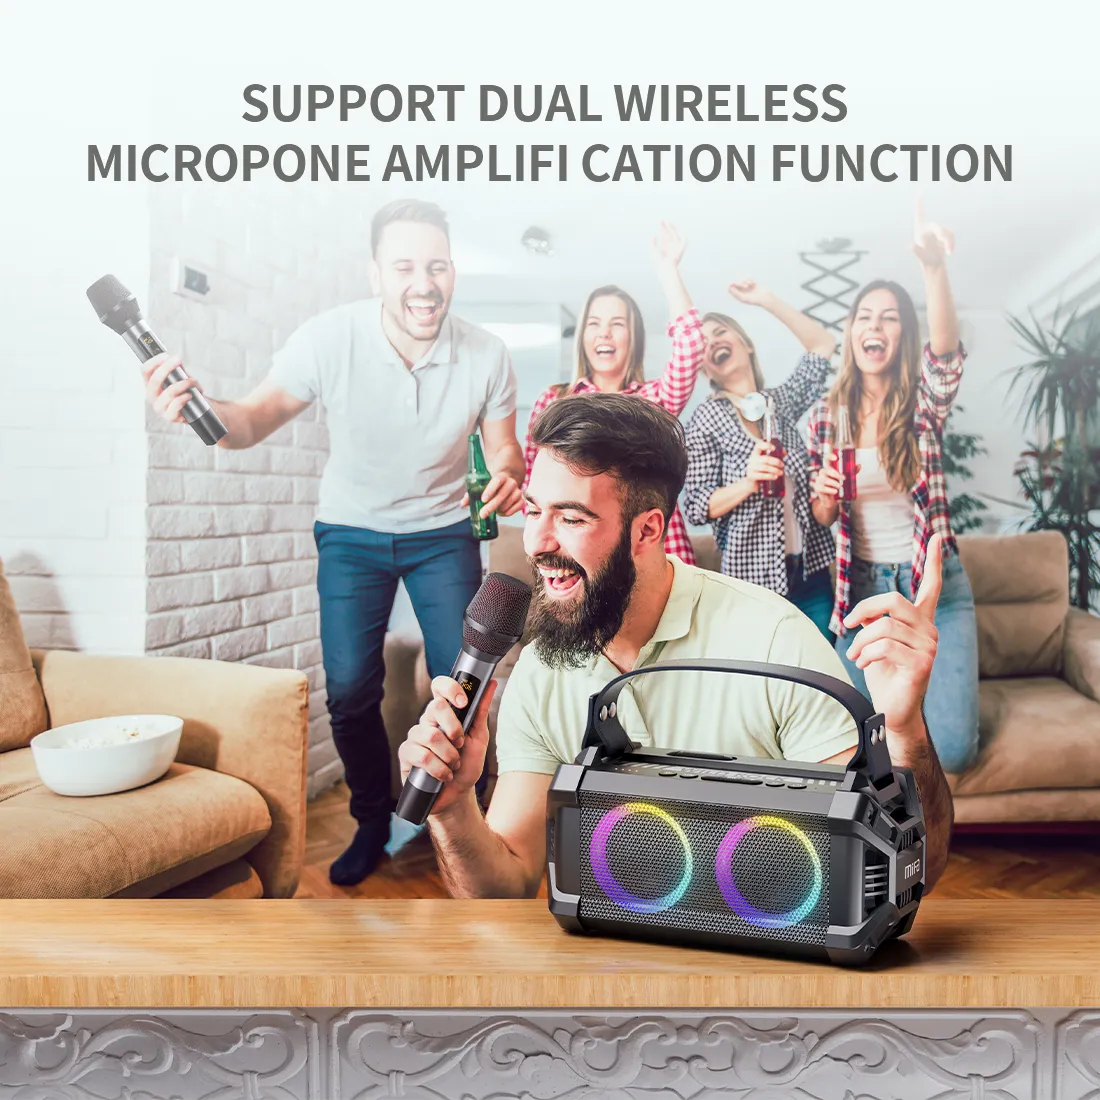 mifa WildRock Portable Karaoke Party Speaker with Wireless Microphone, Bluetooth 5.0 Speakers, 60W Powerful Sound, 13H Playtime